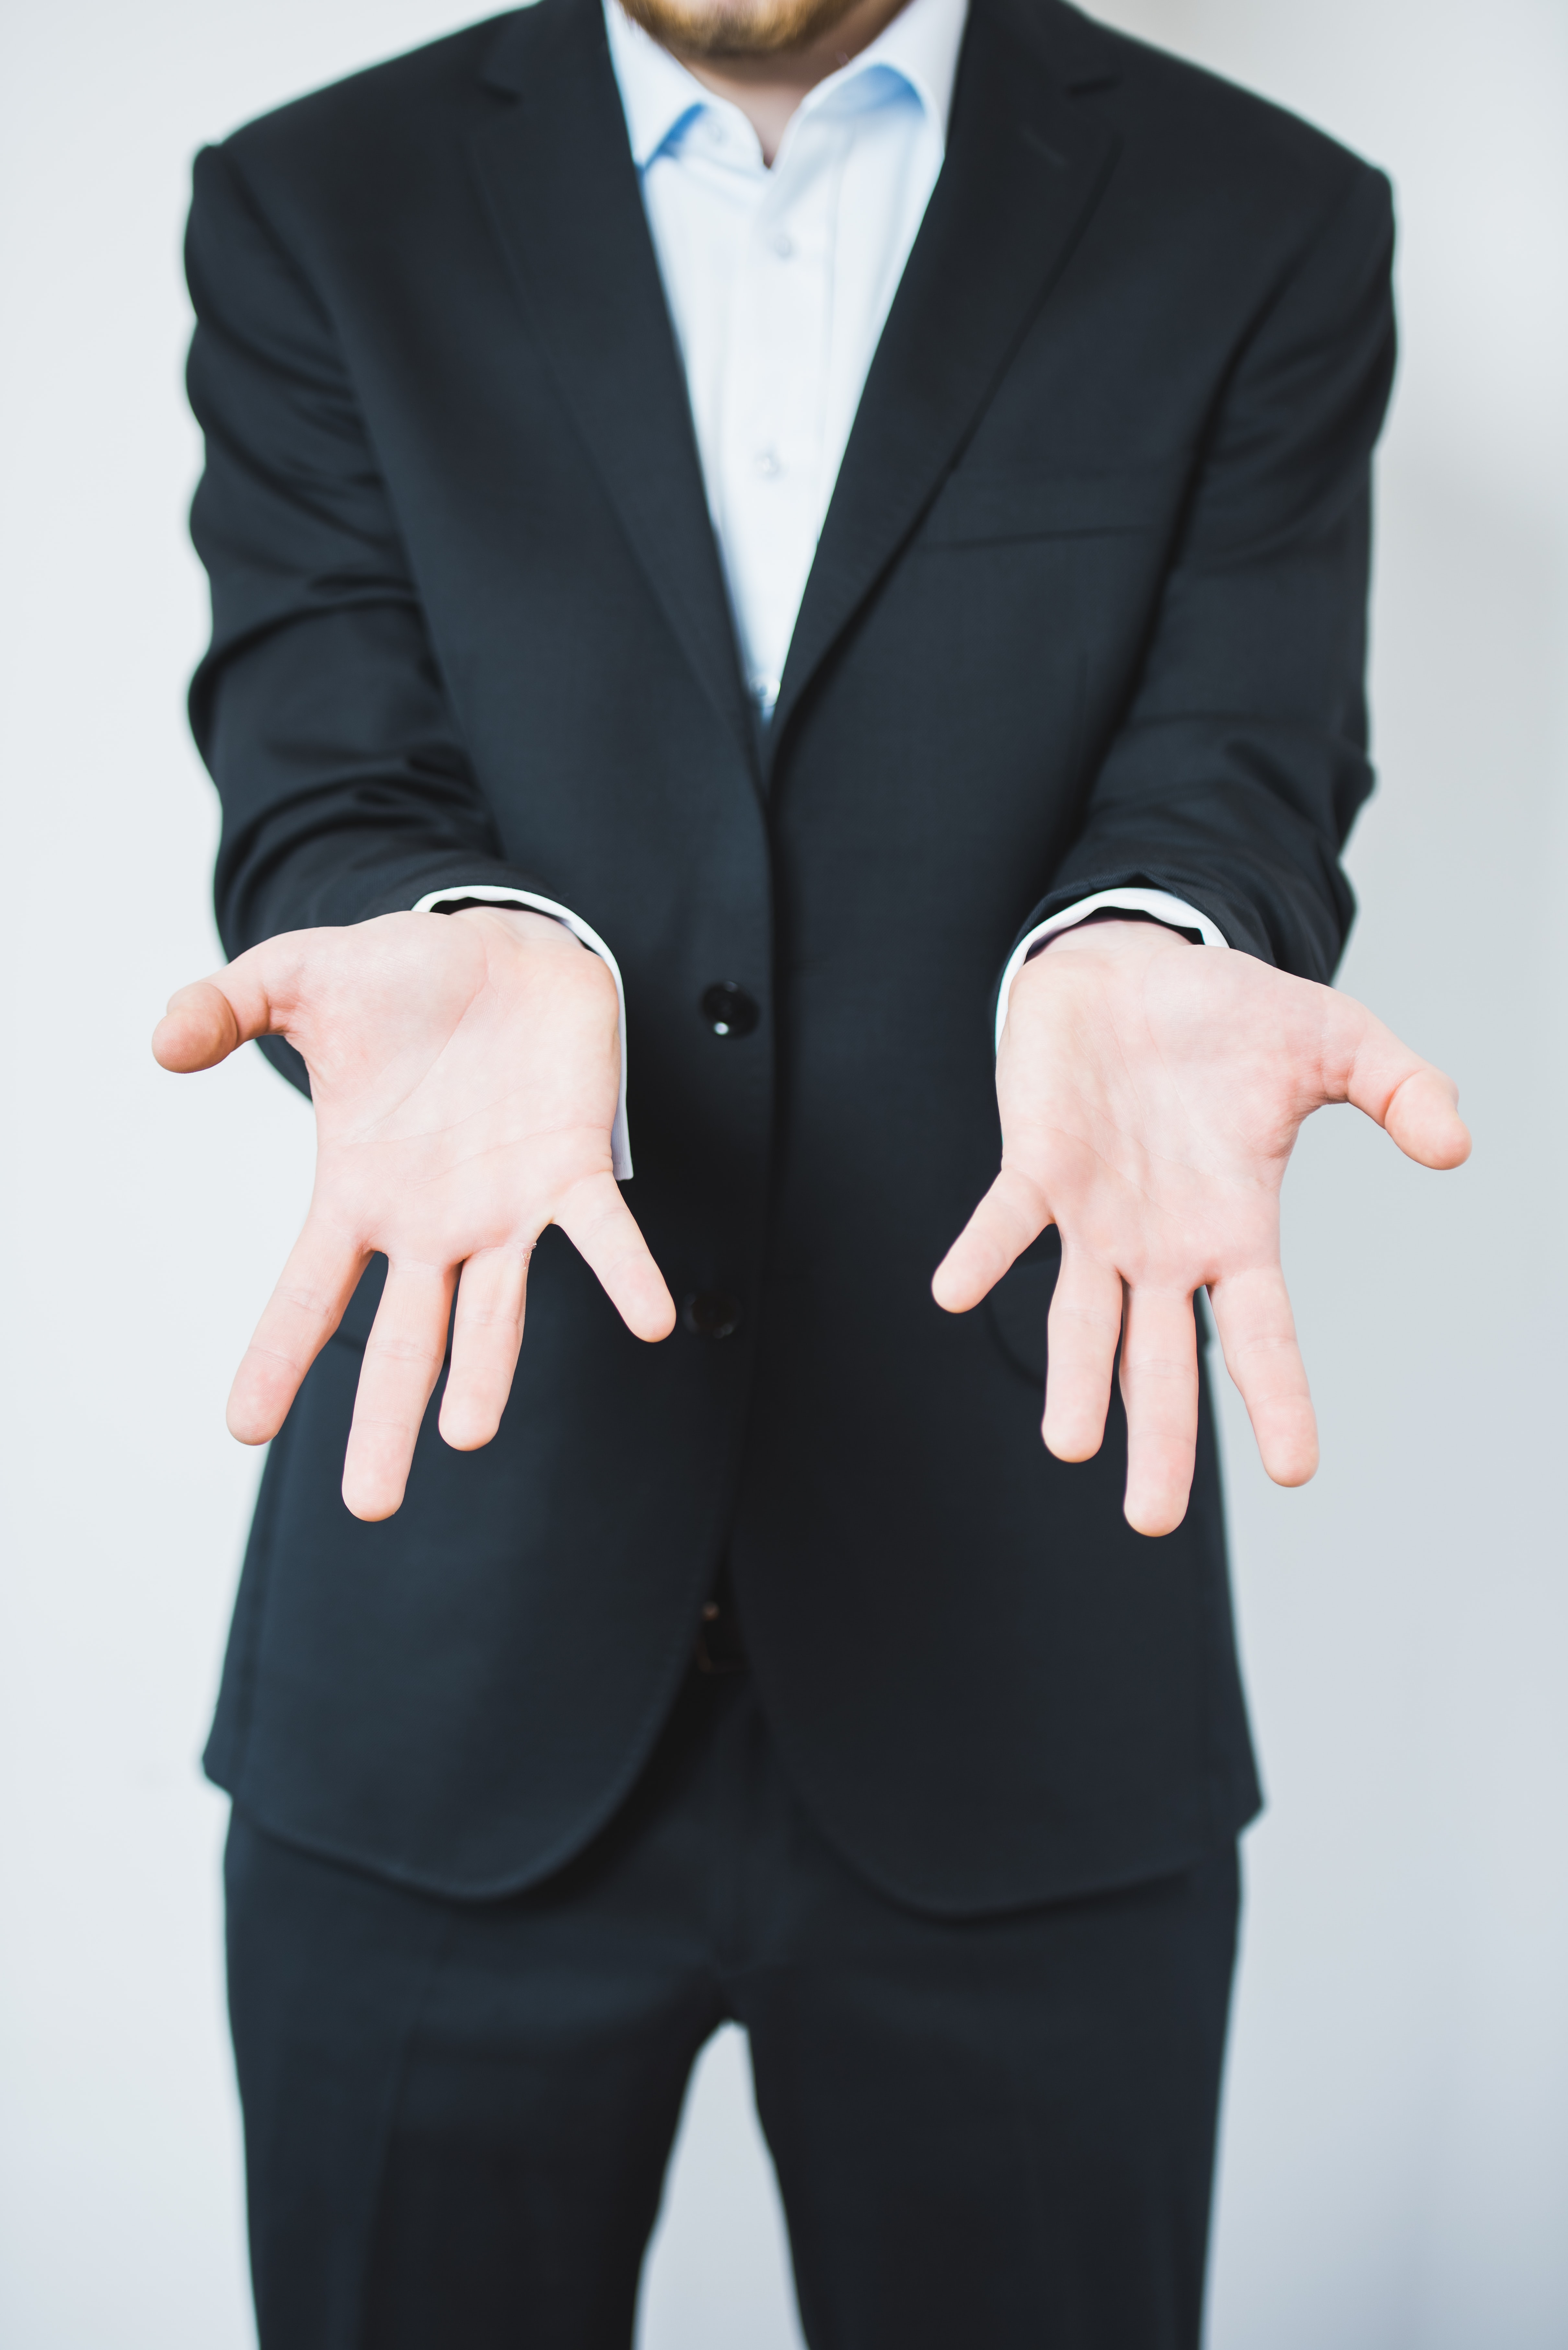 Man in suit showing empty hands; image by Jacek Dylag, via Unsplash.com.